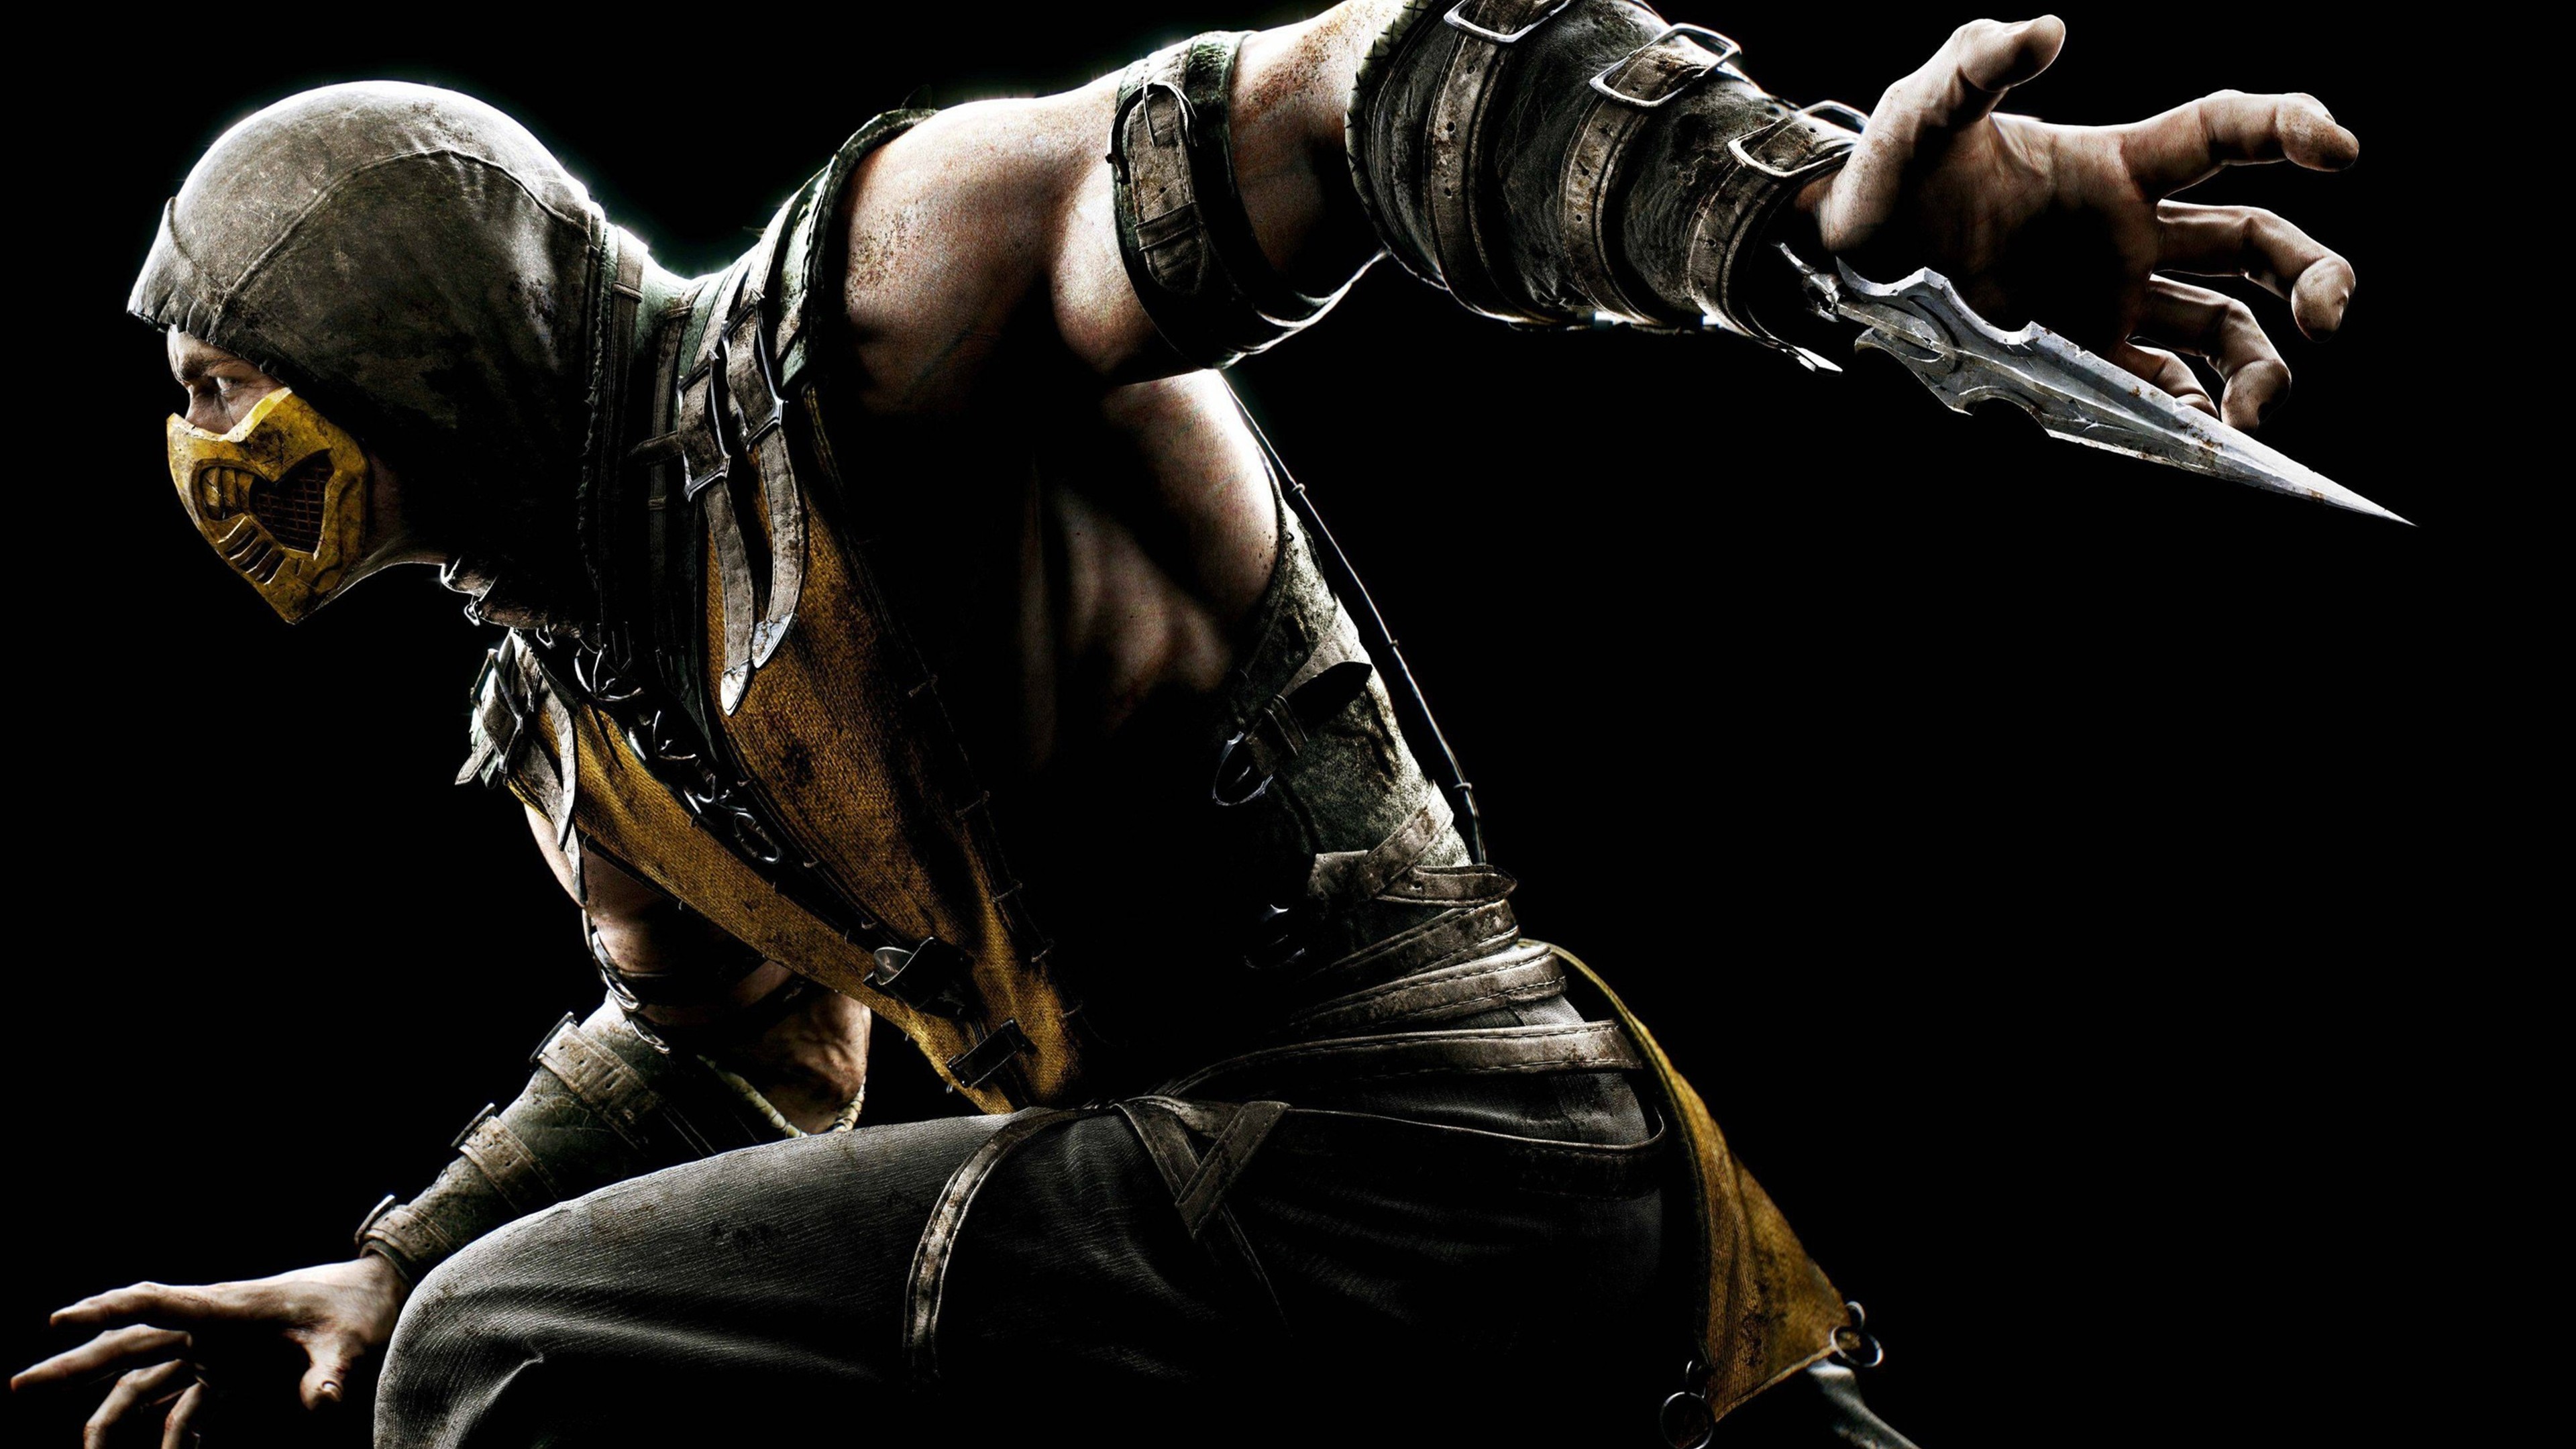 3840x2160 Mortal Kombat X Shaolin trailer [PS3/PS4/Xbox 360/Xbox One/PC] |  Gameplayaholic | Pinterest | Mortal kombat and Xbox